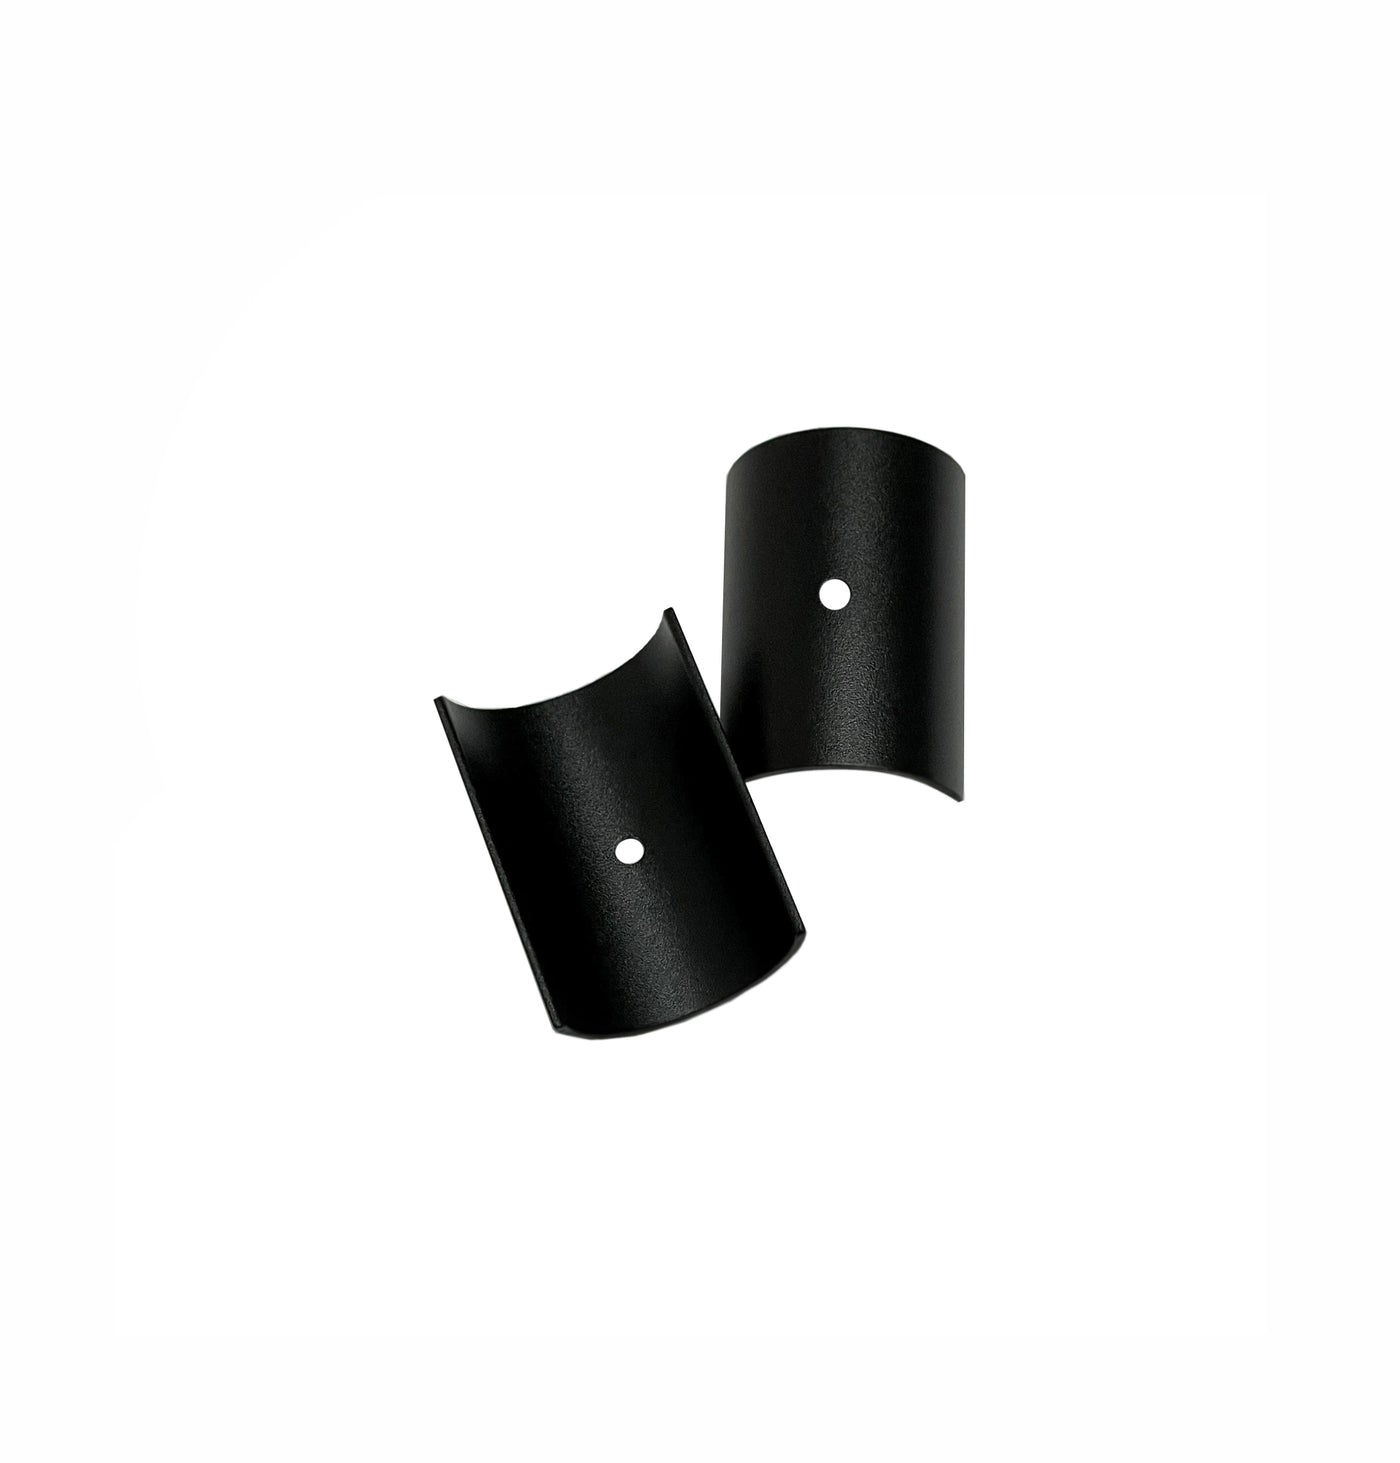 Reverse Handlebar Shim 35.0mm to 31.8mm Aluminum Black Adapts 35.0 Stem to 31.8mmm Bar